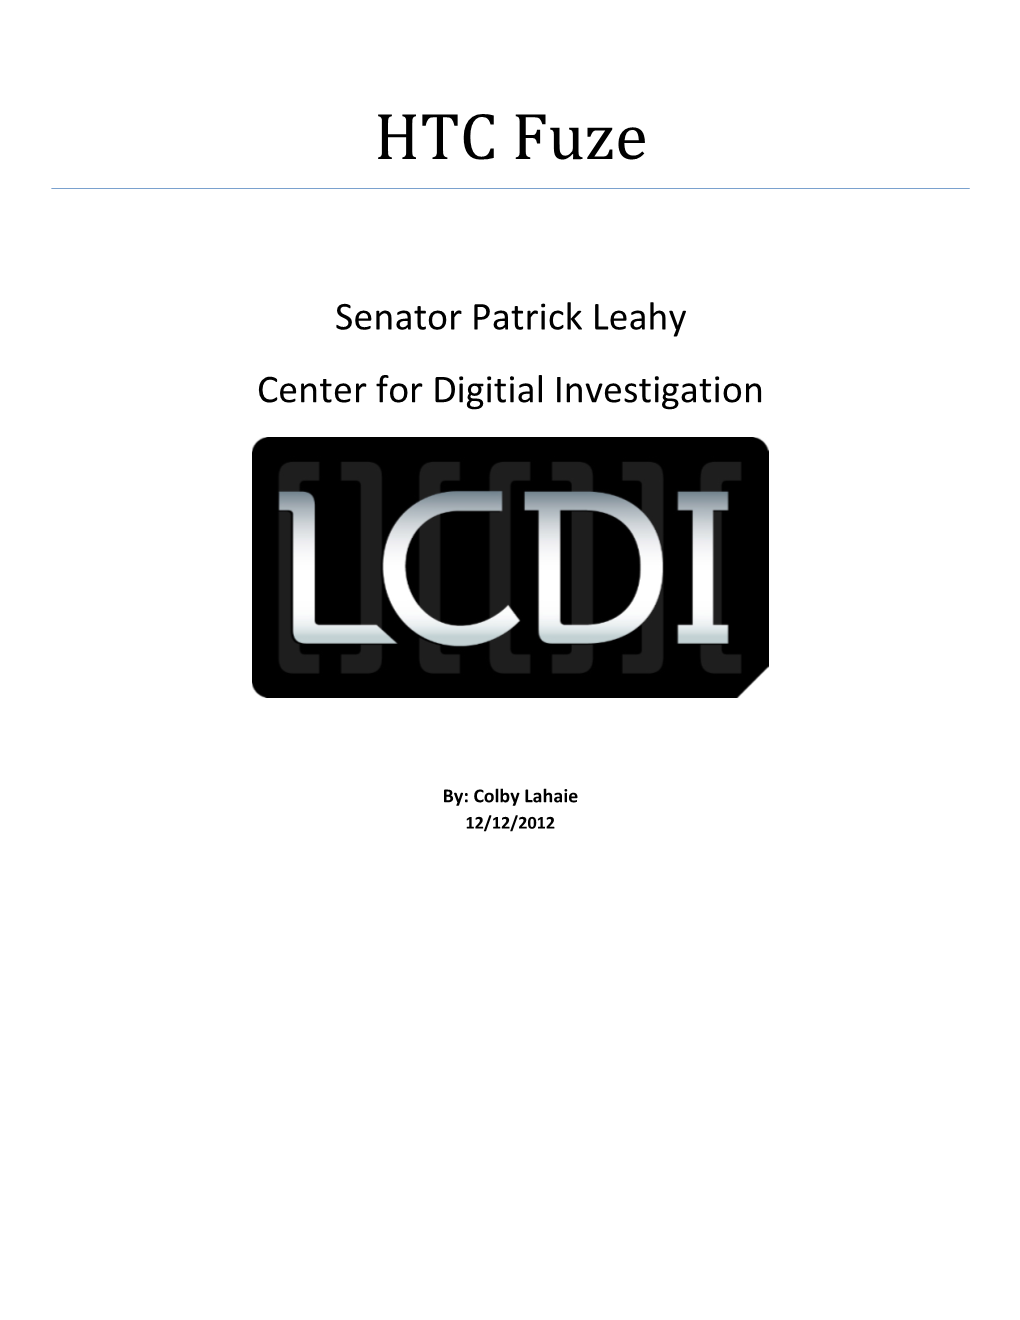 Senator Patrick Leahy Center for Digitial Investigation